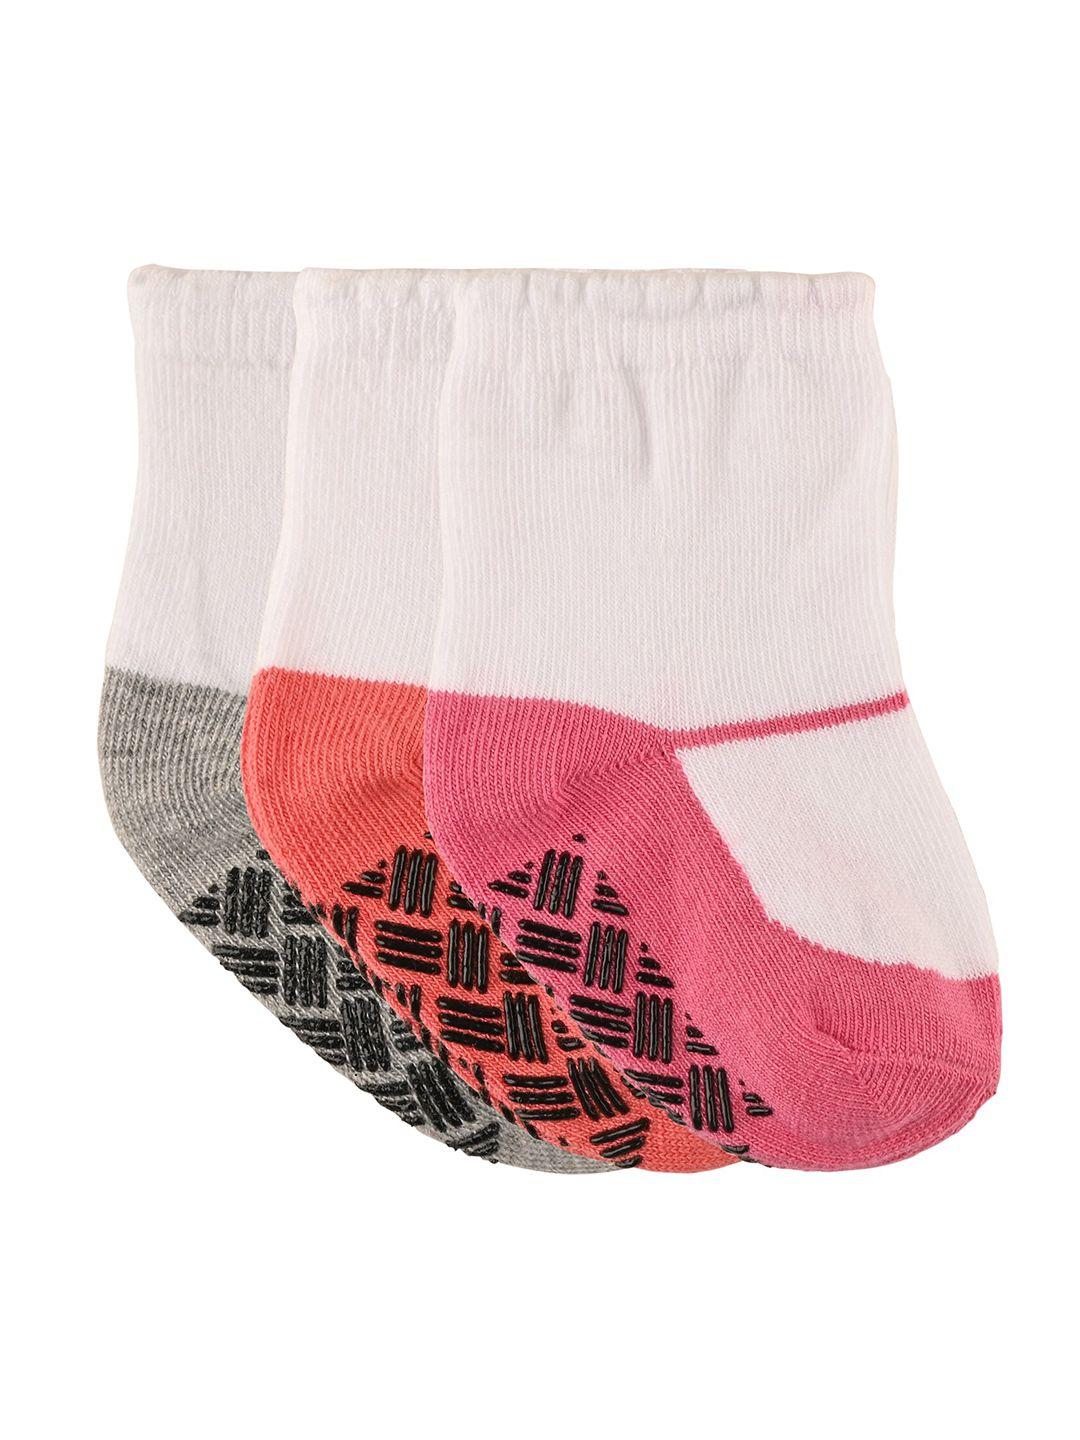 Nuluv Girls Pack Of 3 Patterned Ankle Length Cotton Socks